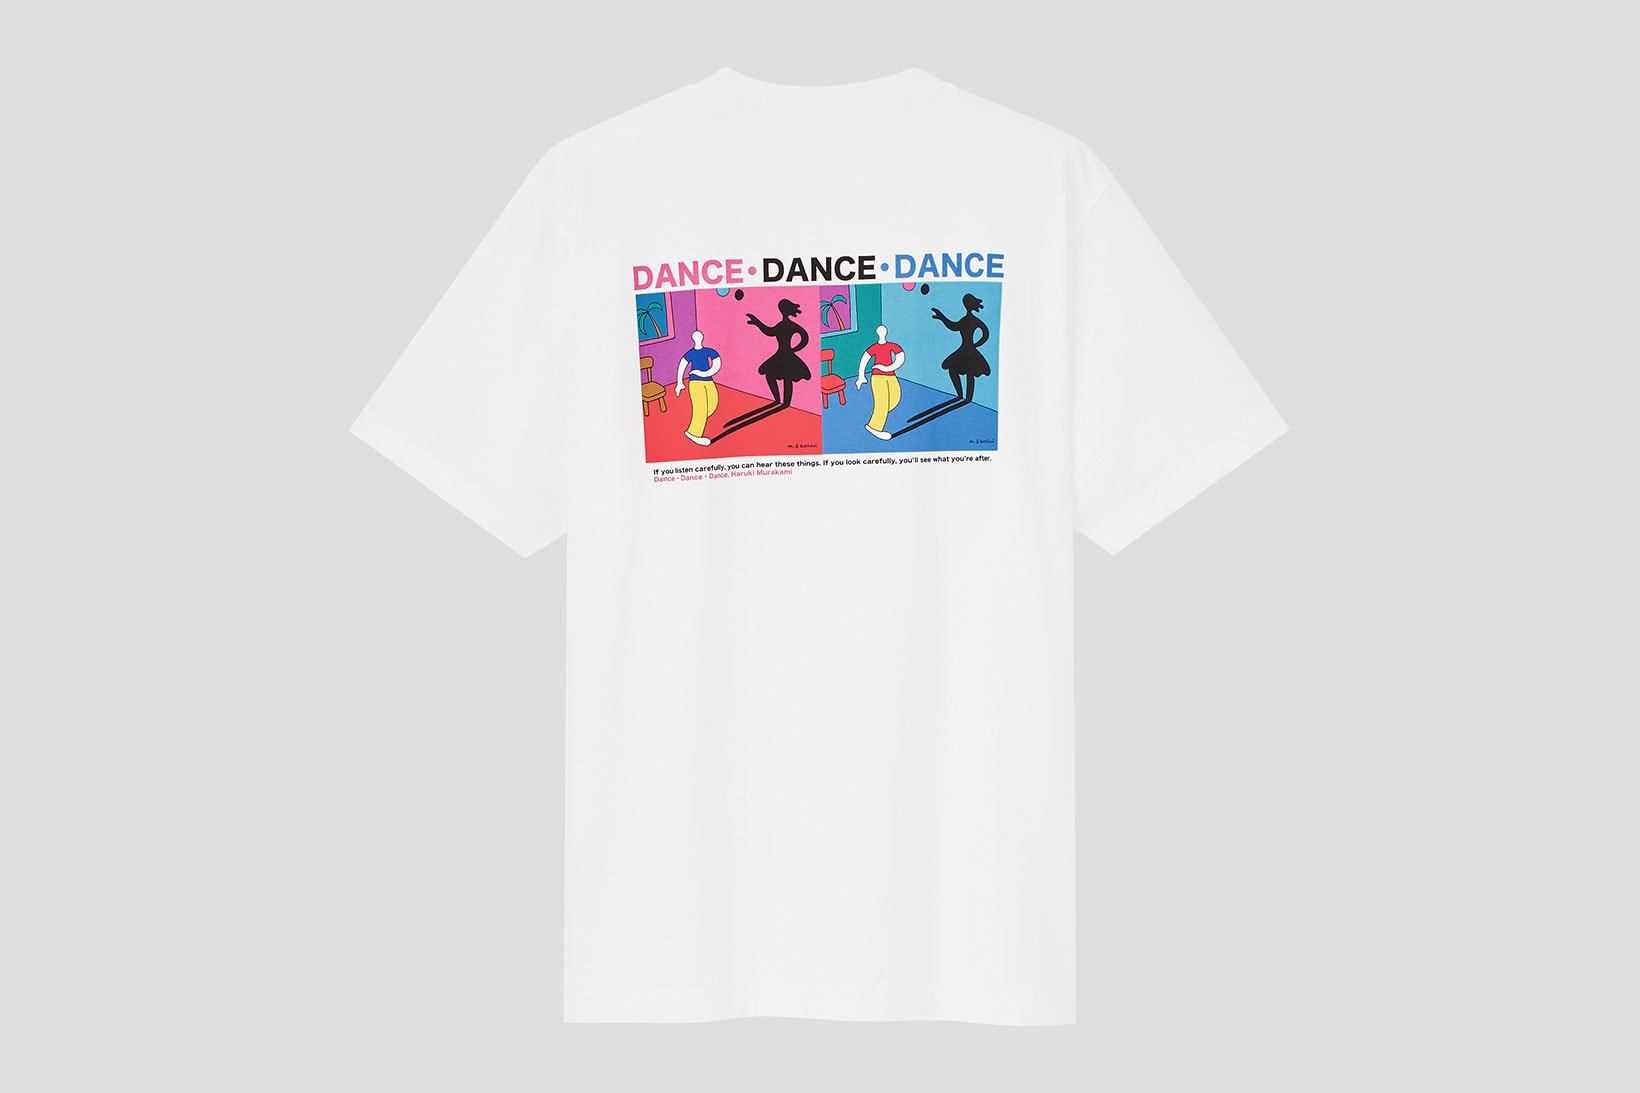 uniqlo ut haruki murakami author books collaboration t-shirt dance dance dance graphics